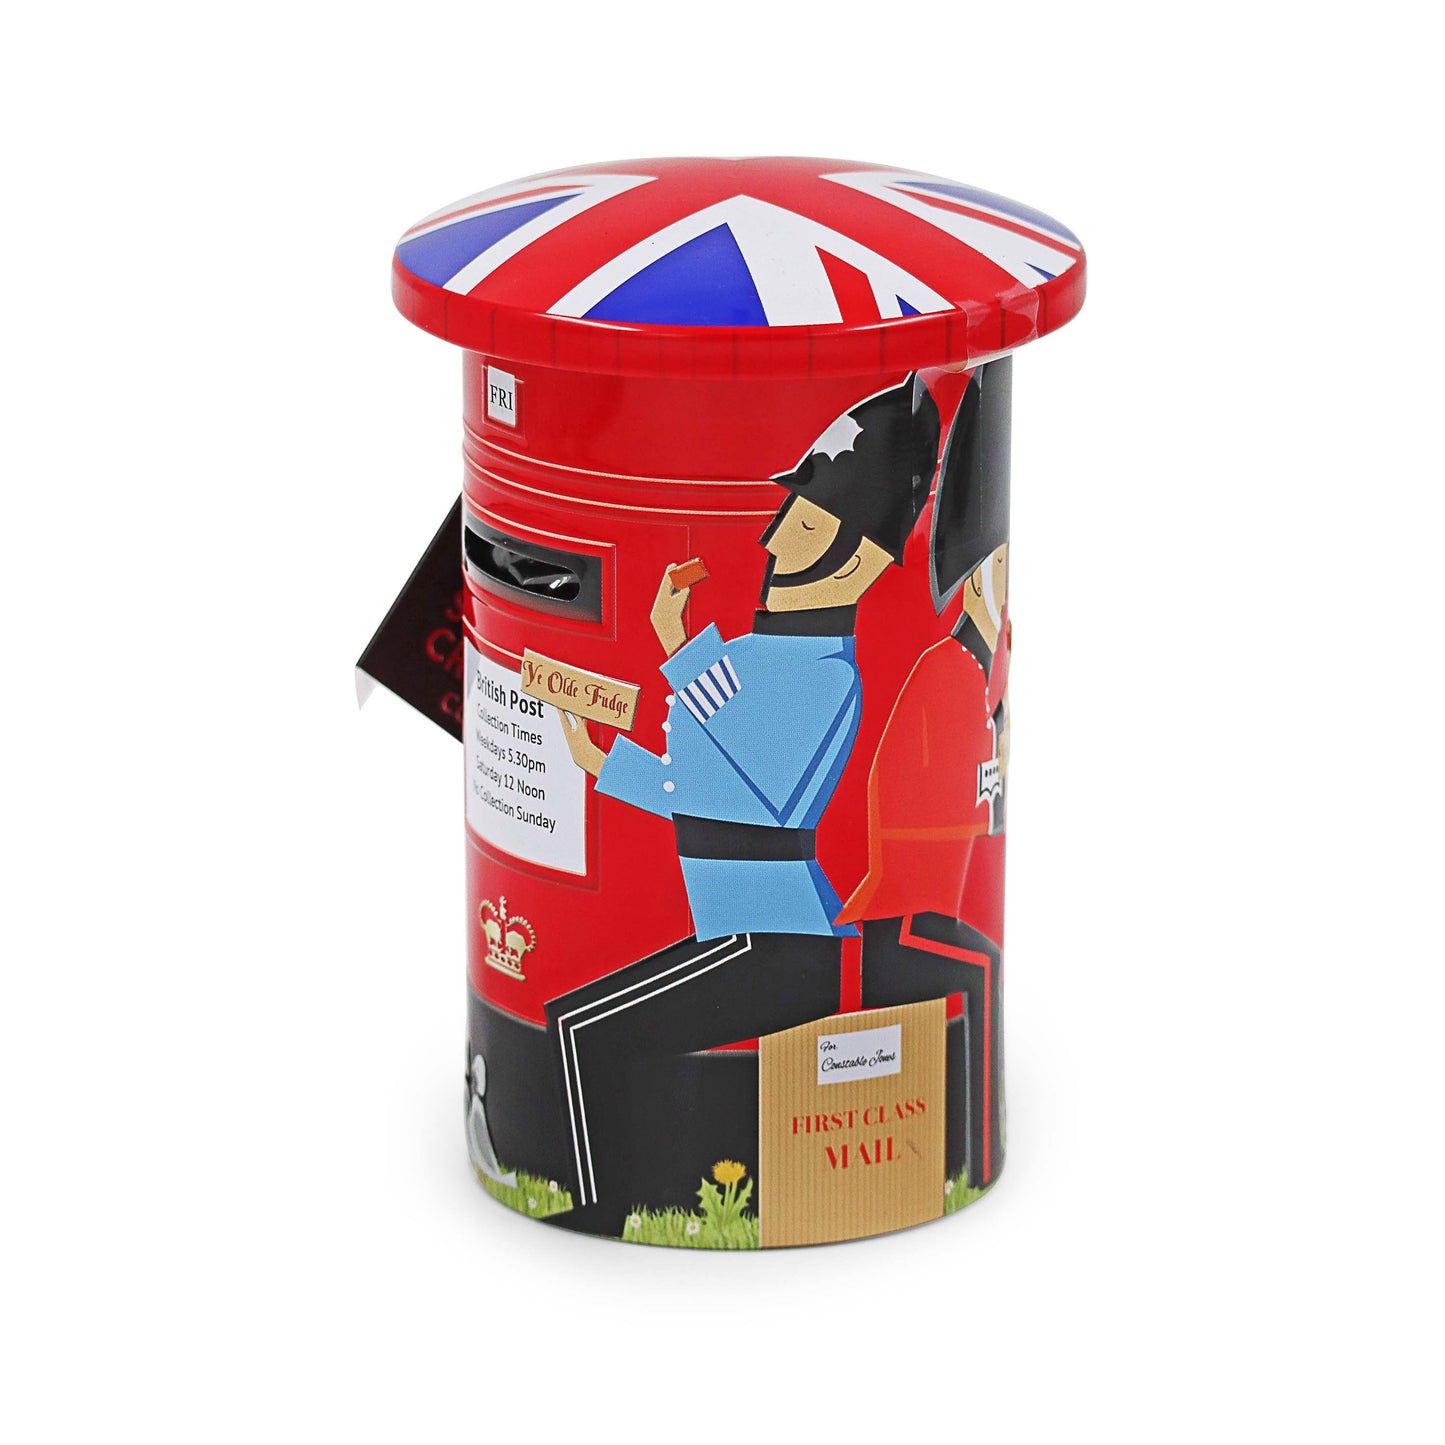 Union Jack Post Box Vanilla Fudge Luxury Gift Souvenir